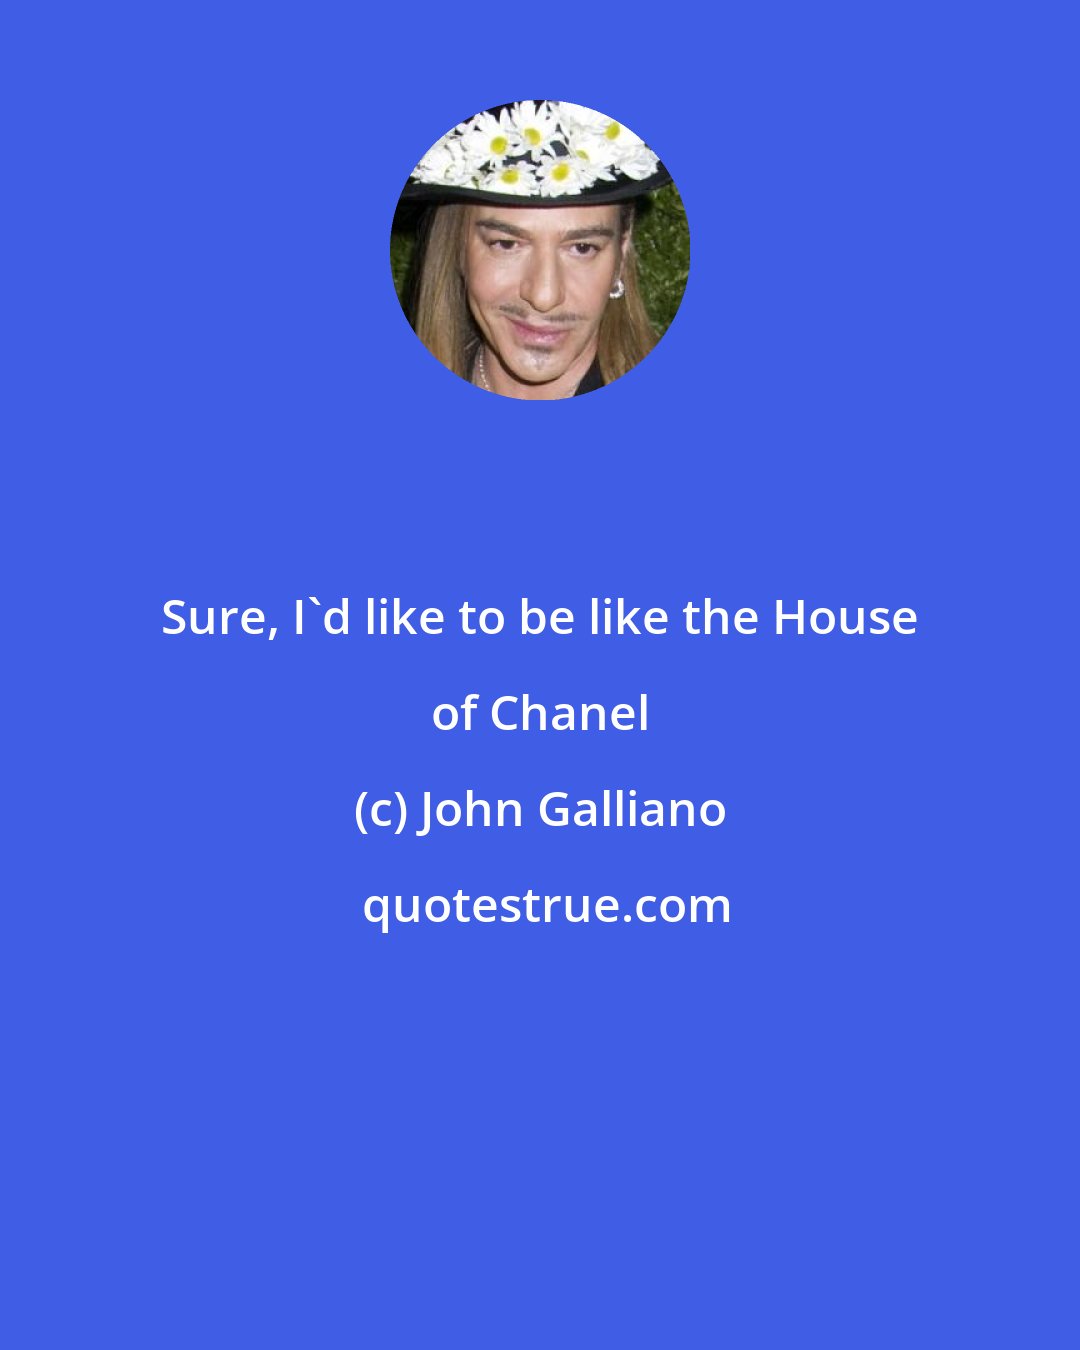 John Galliano: Sure, I'd like to be like the House of Chanel